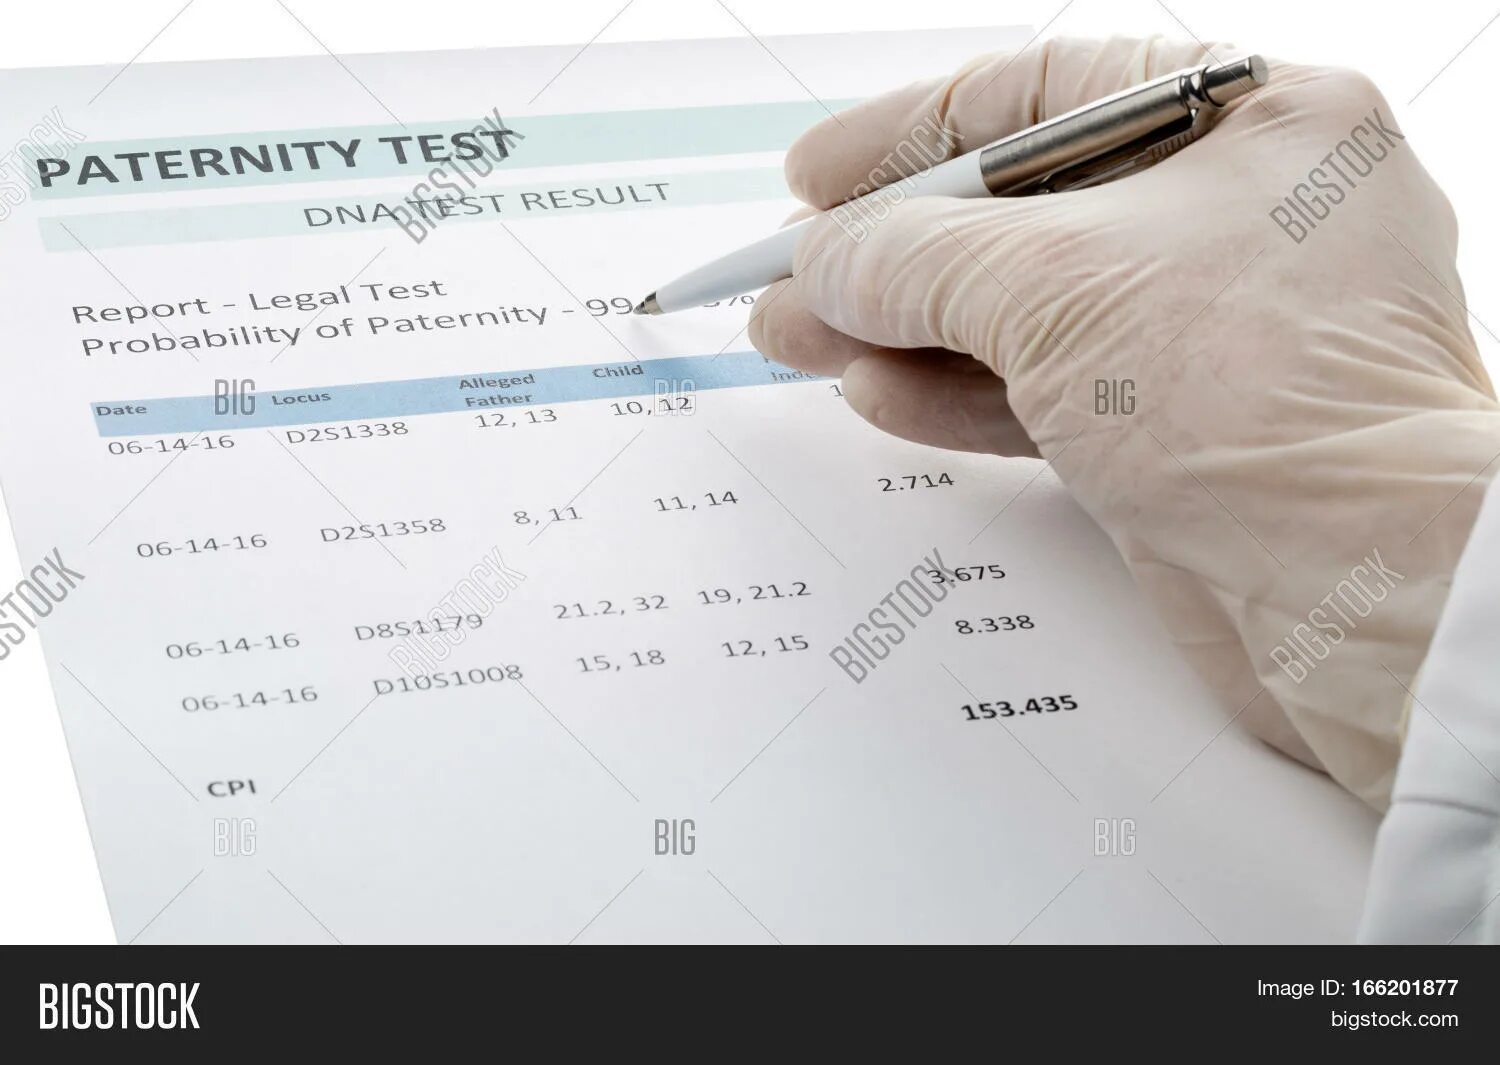 Сделать тест днк во время беременности. Paternity Test Results. ДНК тест. Тест на отцовство в руках. ДНК тест во время беременности.